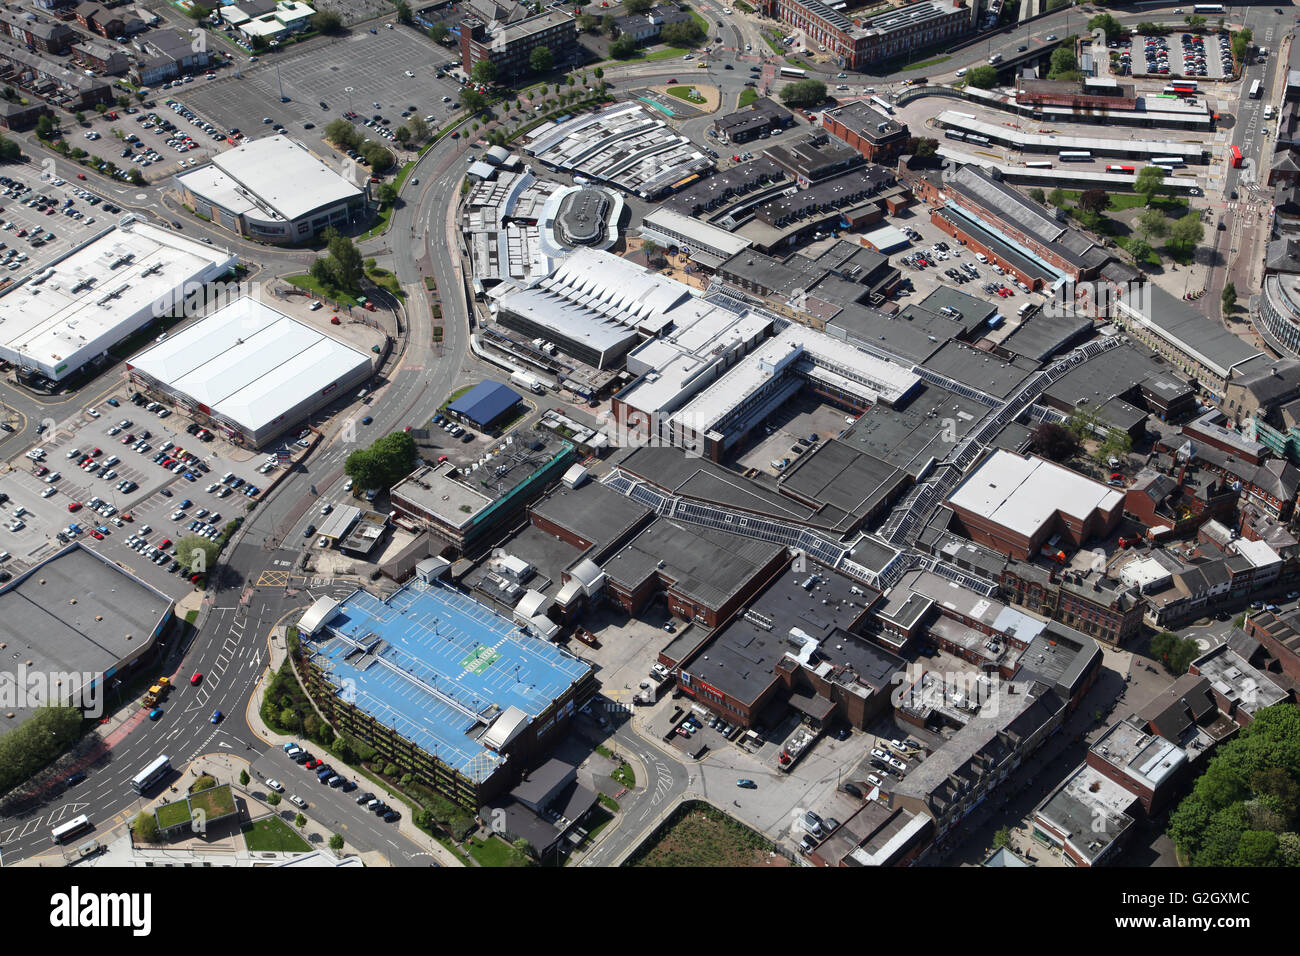 Aerial View Of Bury Town Centre Lancashire Uk G2GXMC 